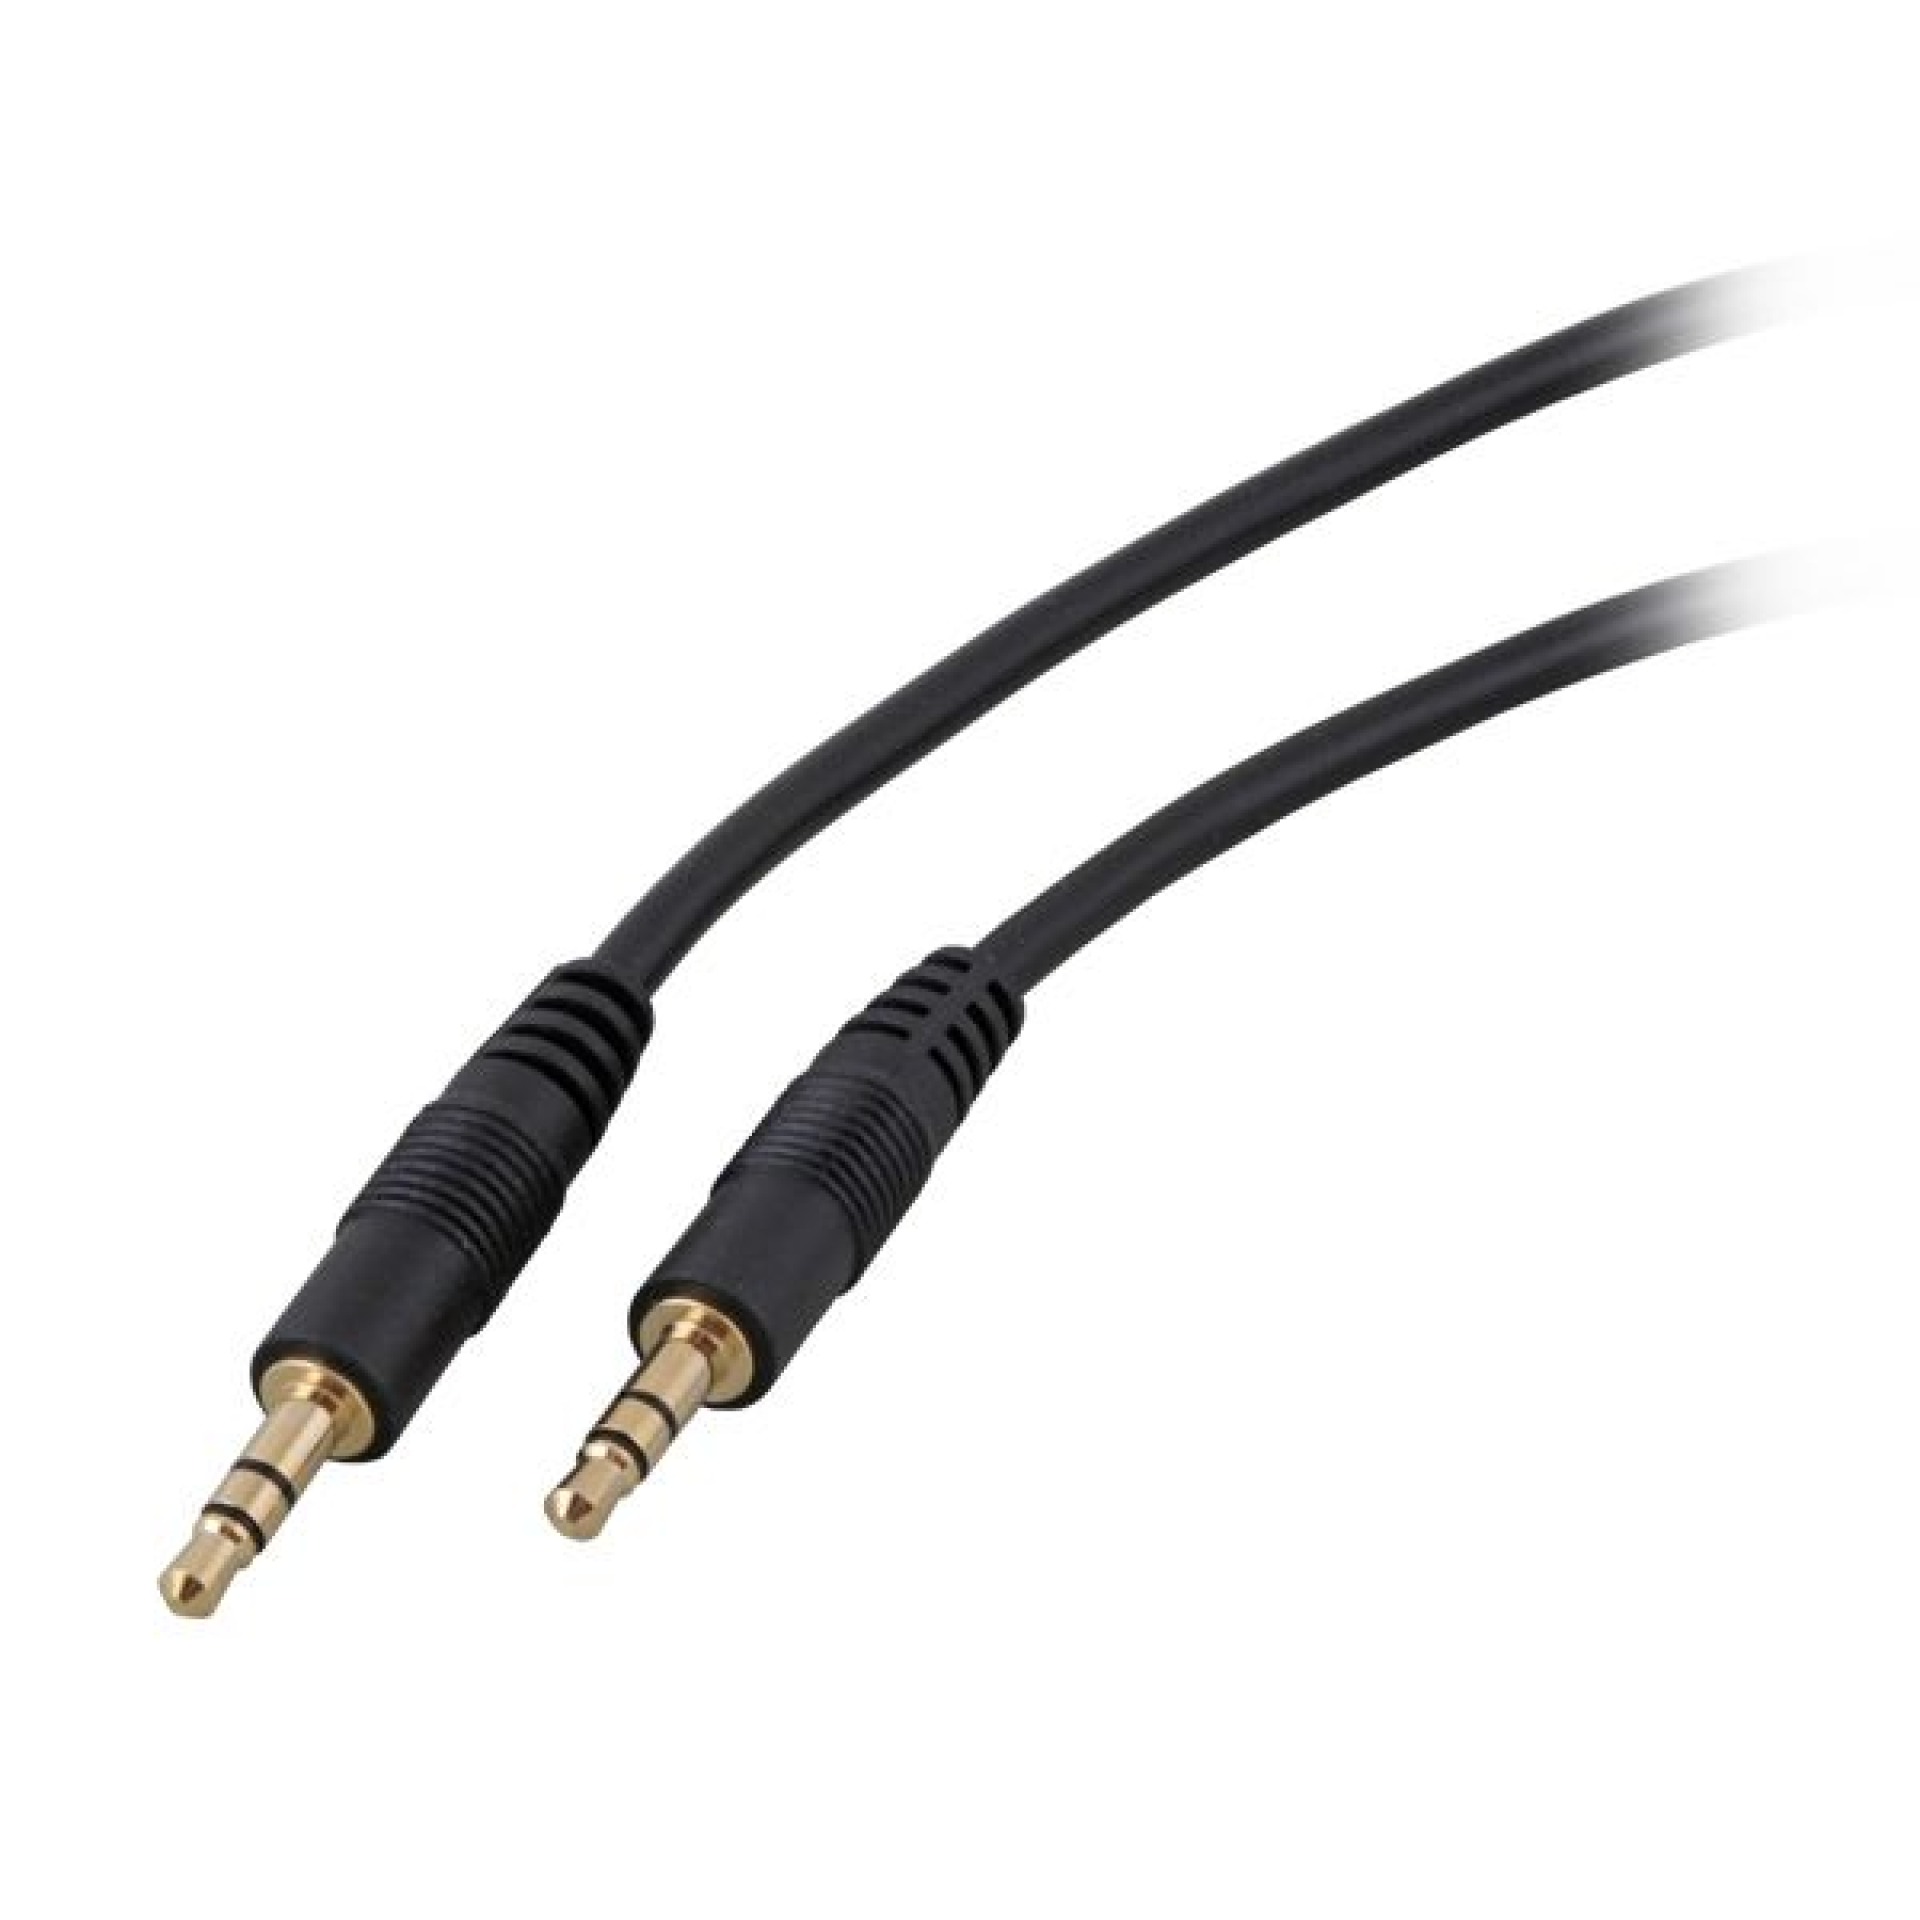 Audio Connection Cabel, Klinke 3.5mm Stereo, 3 meters, black